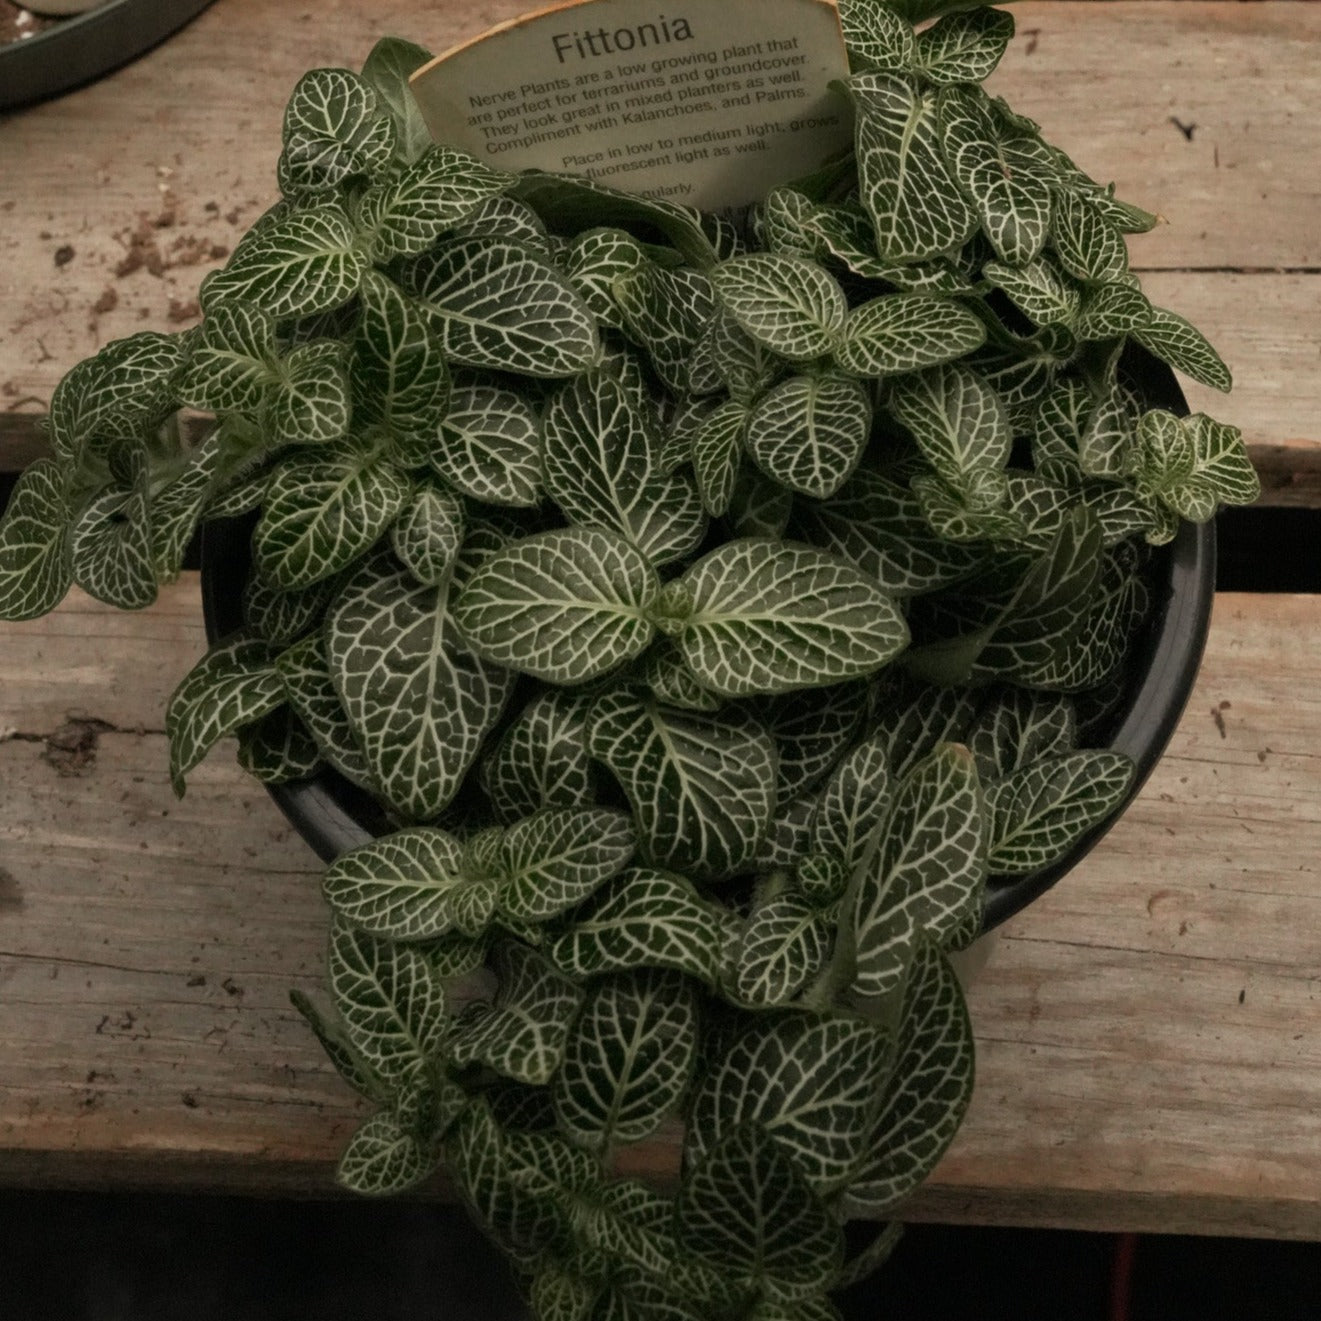 Fittonia Plants